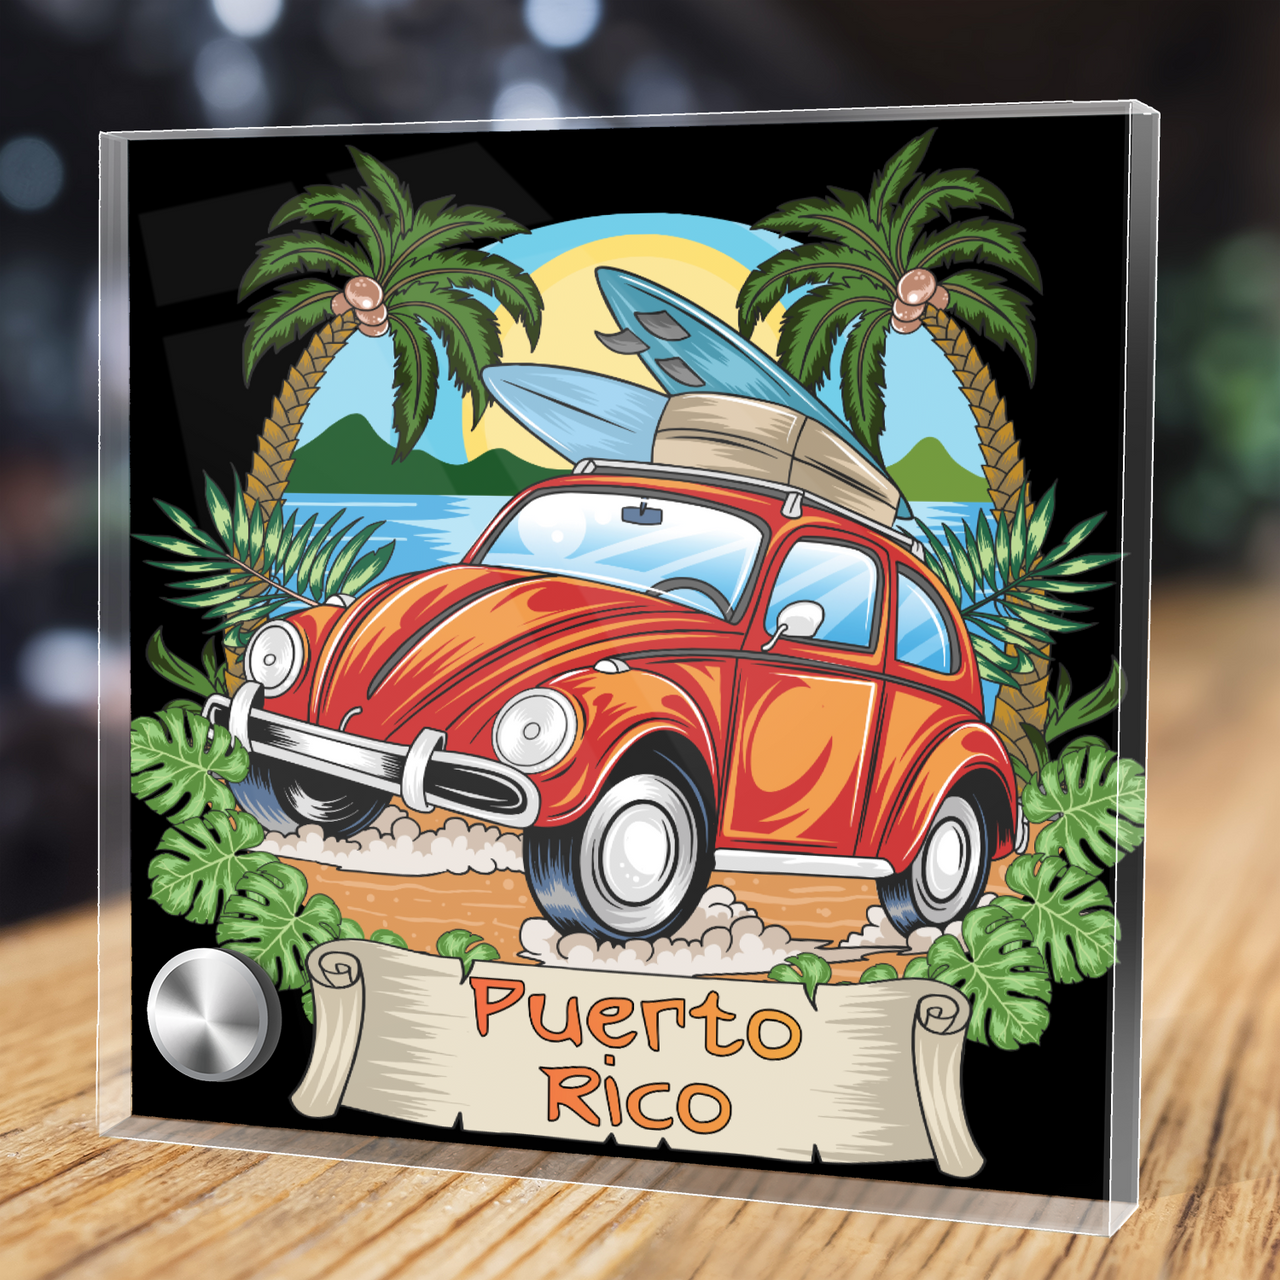 Puerto Rico Beach VW Scene Lumenglass Stand 3.5" x 3.5"